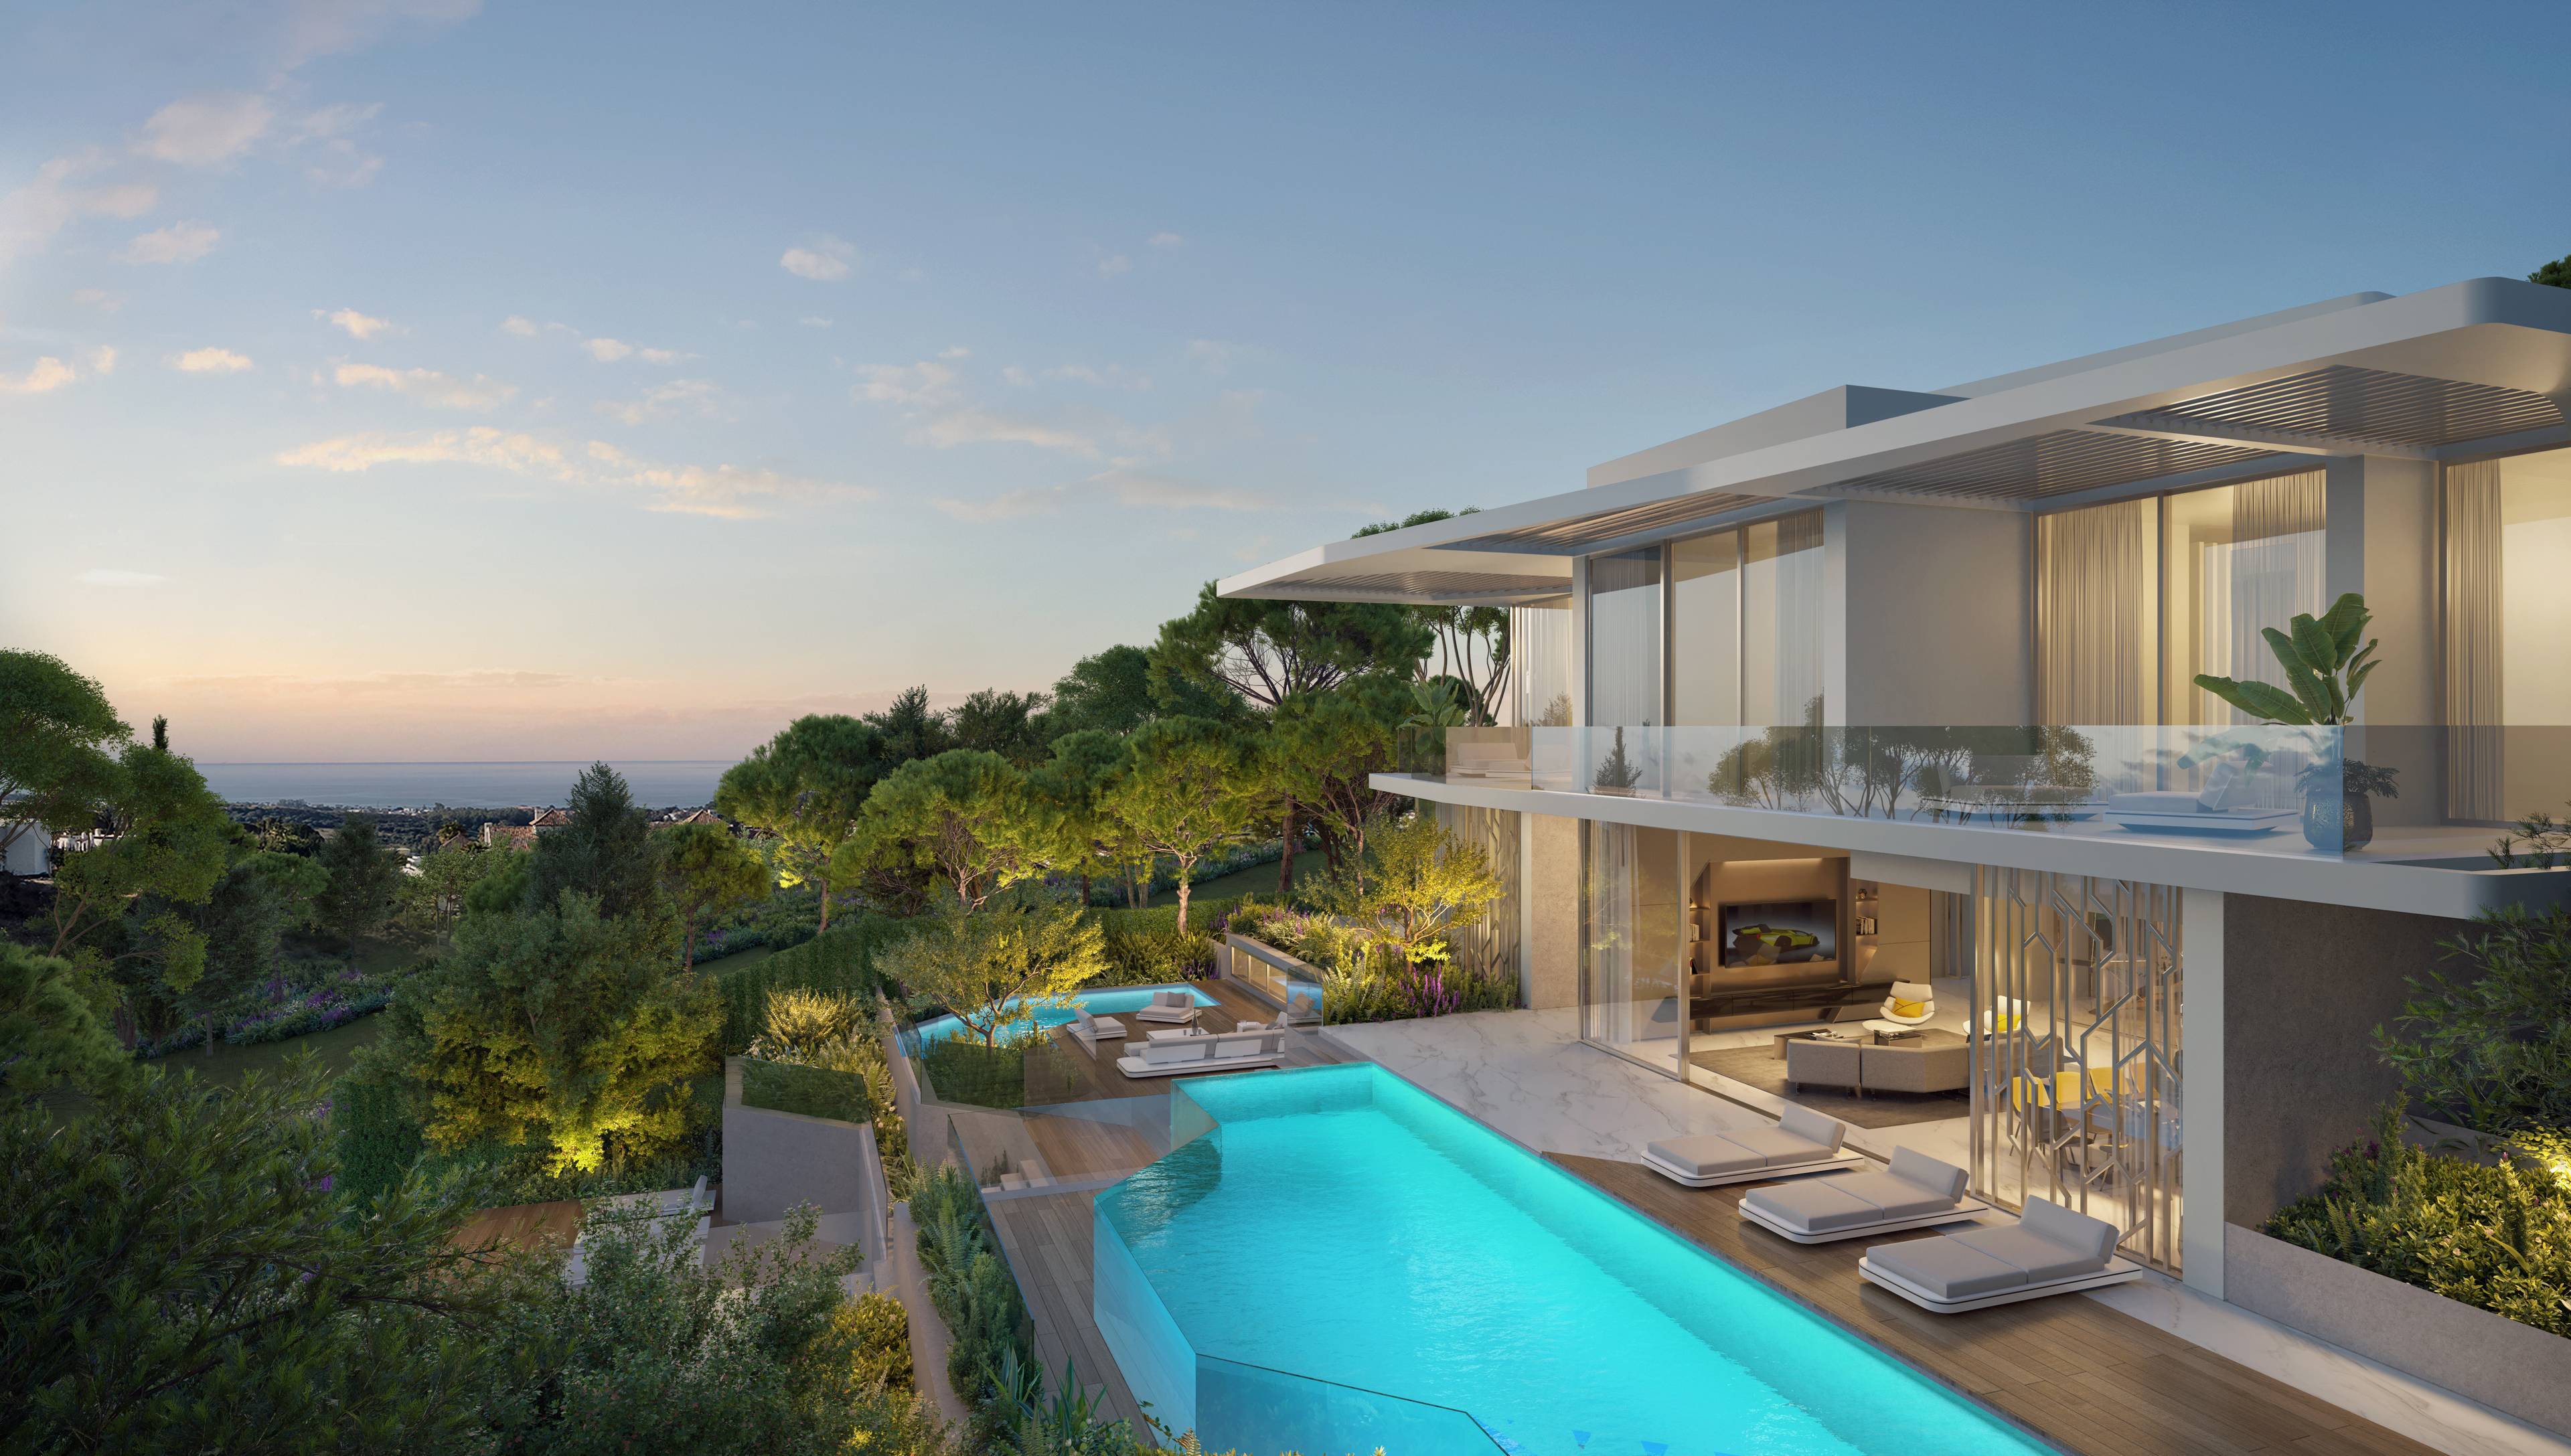 4 Bedroom Villa For Sale in the heart of Benahavís - Tierra Viva: Design Inspired by Automobili Lamborghini